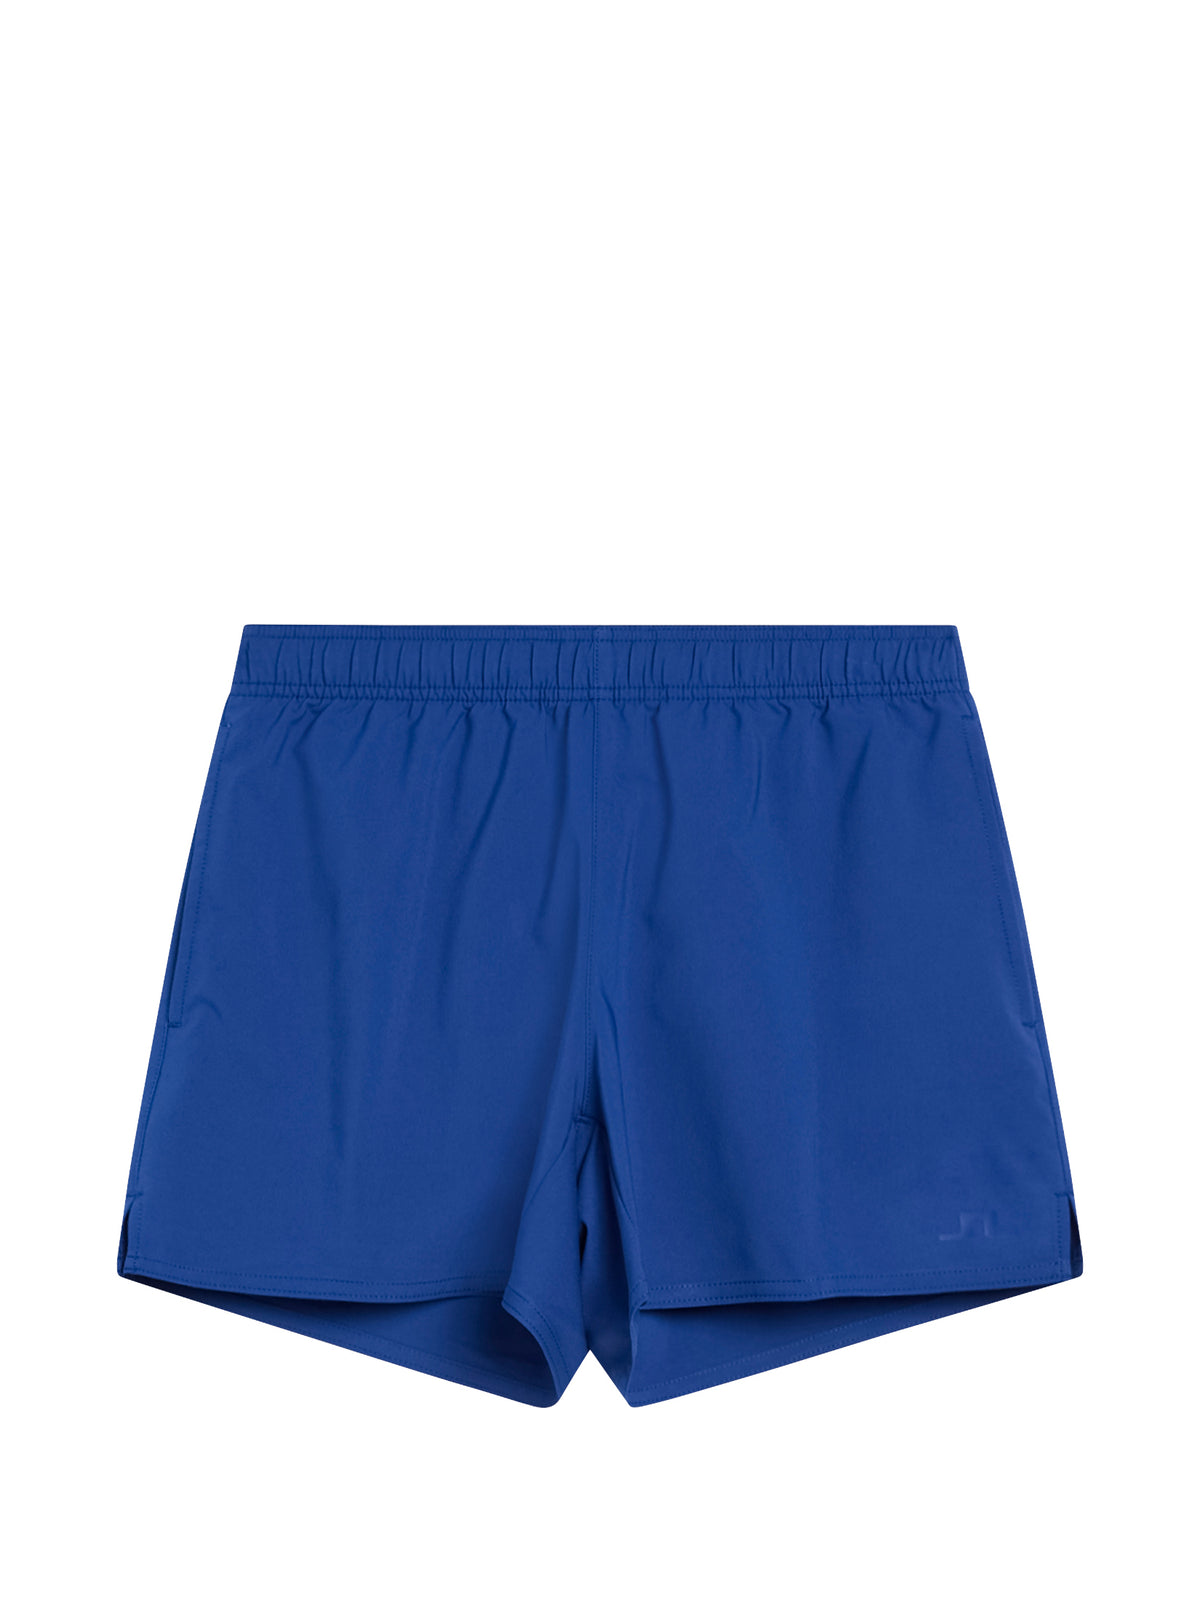 Pricilla Shorts / Sodalite Blue